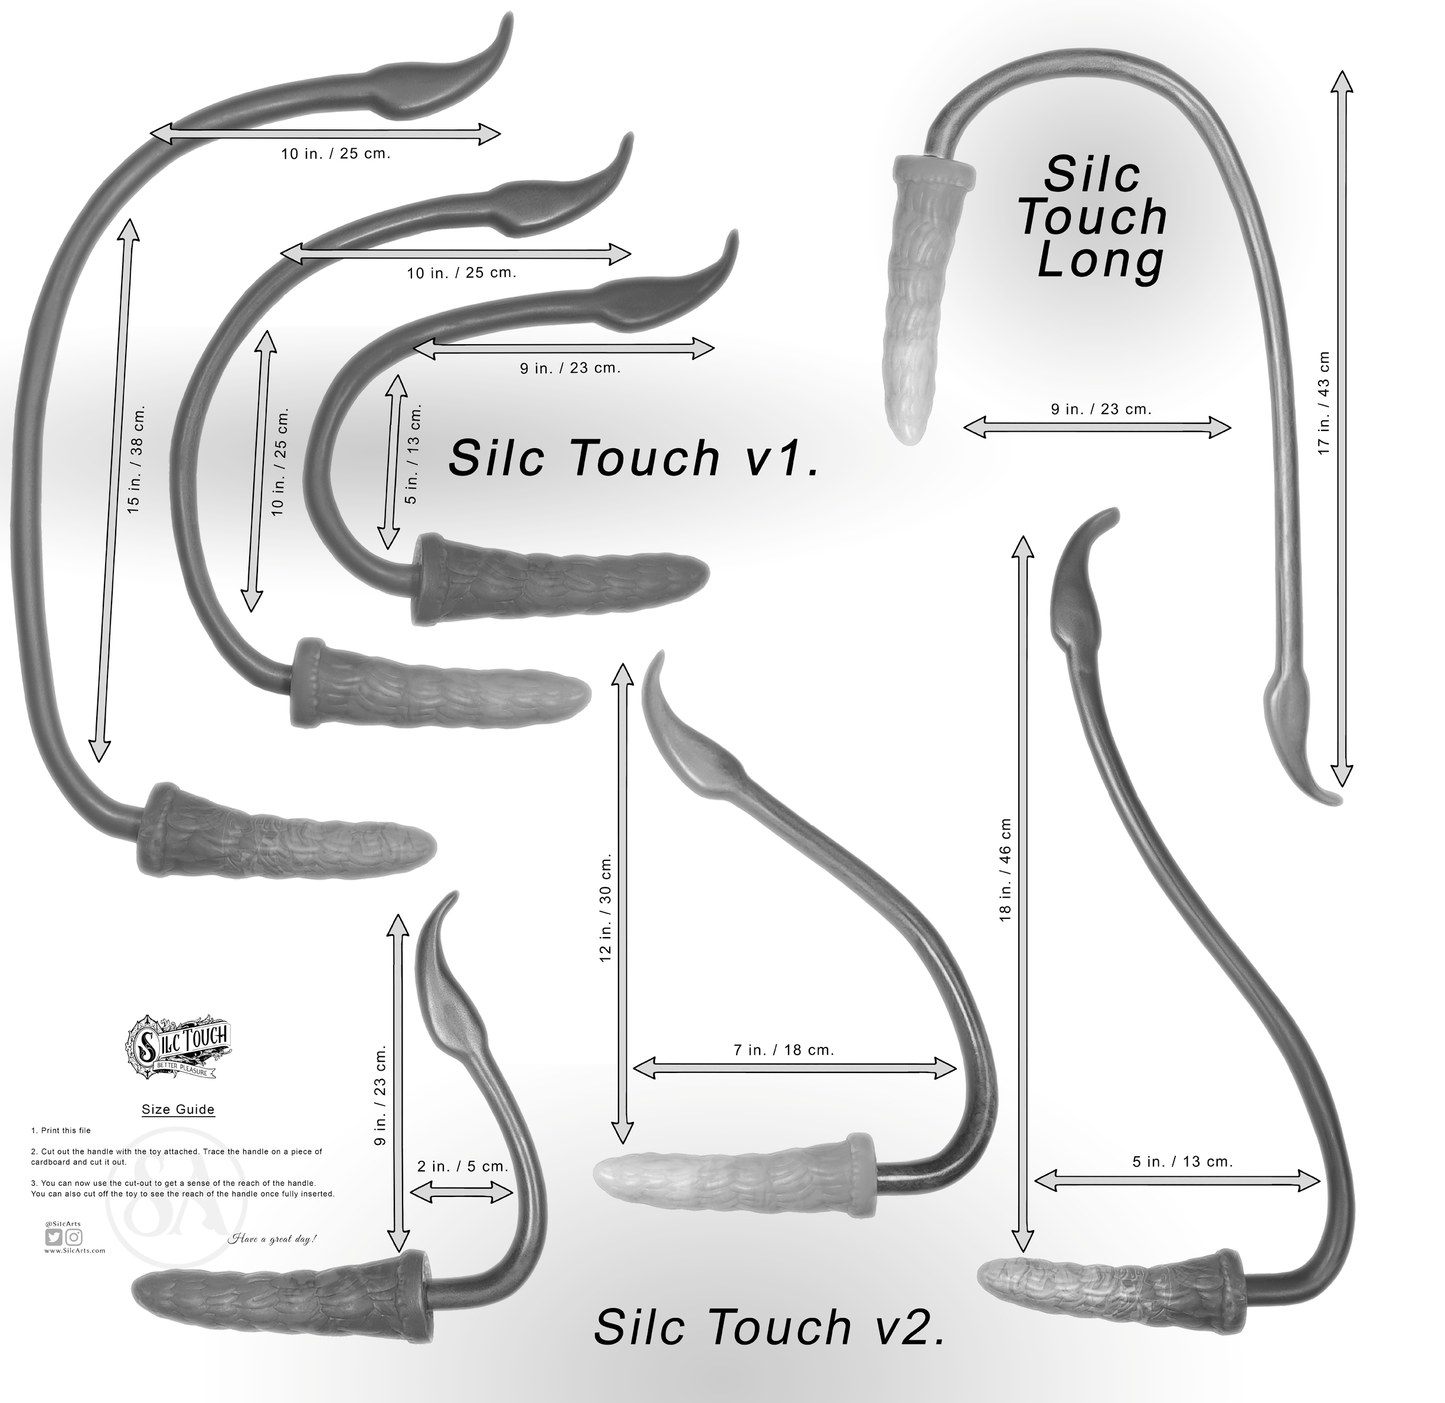 Silc Touch v1. - Ergonomic handle - VacLoc - Md